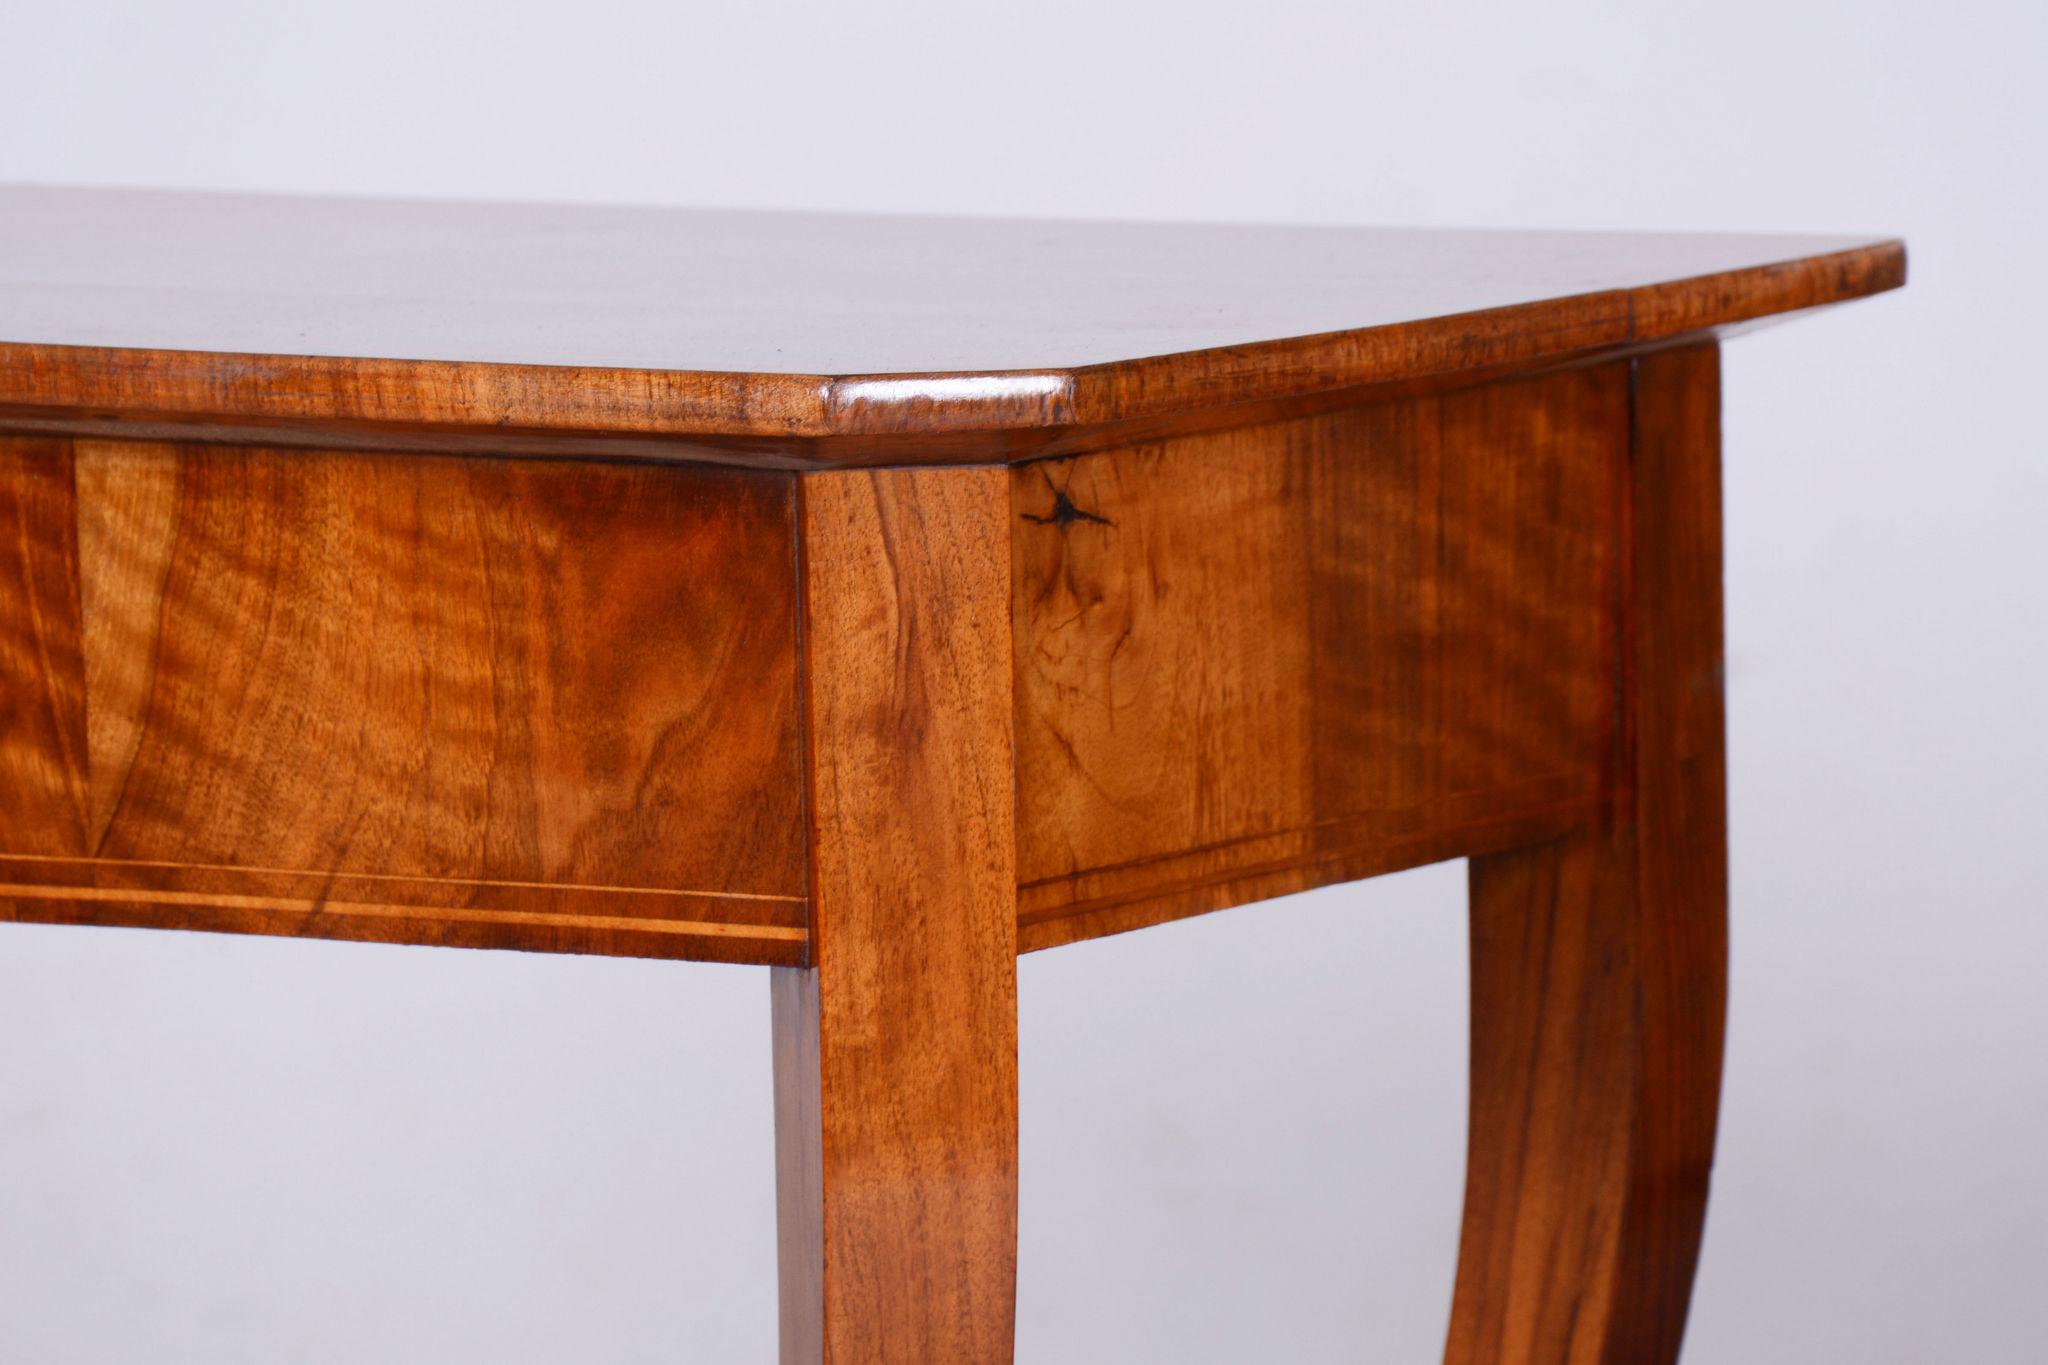 19th Century Restored Small Biedermeier Side Table, Walnut, Spruce, Maple, Austria, 1820s